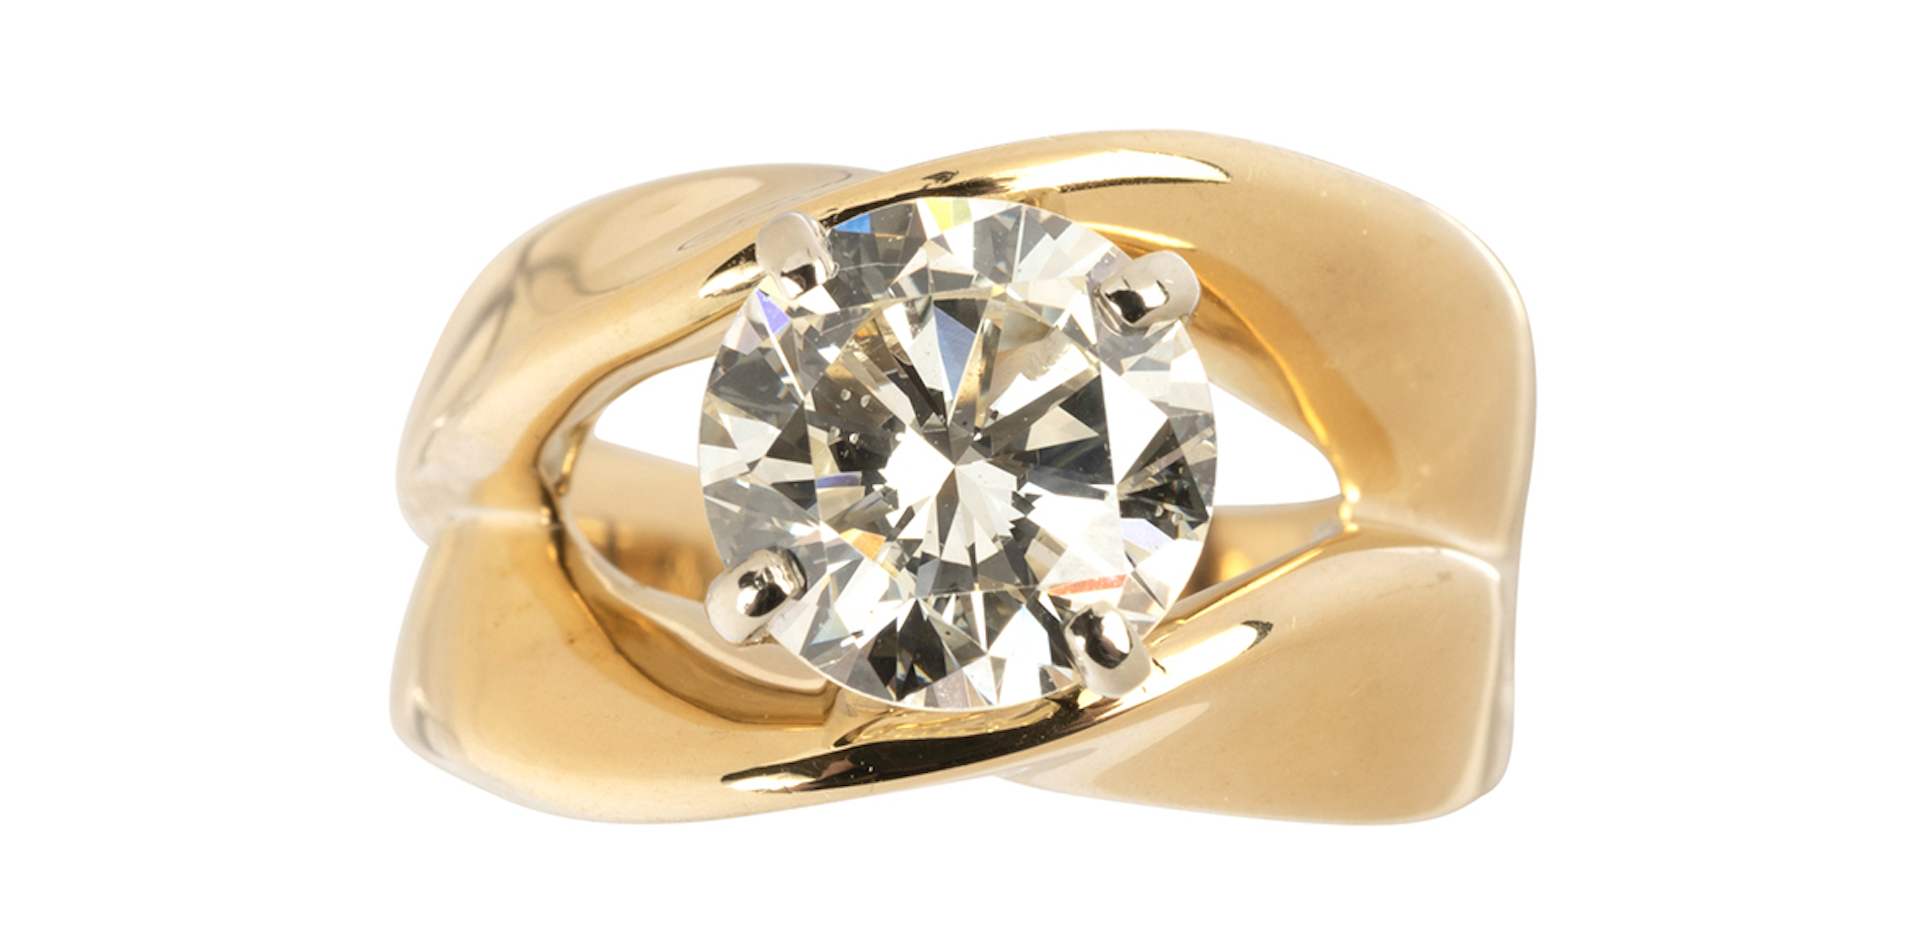 2.25-carat diamond ring, est. $7,000-$9,000